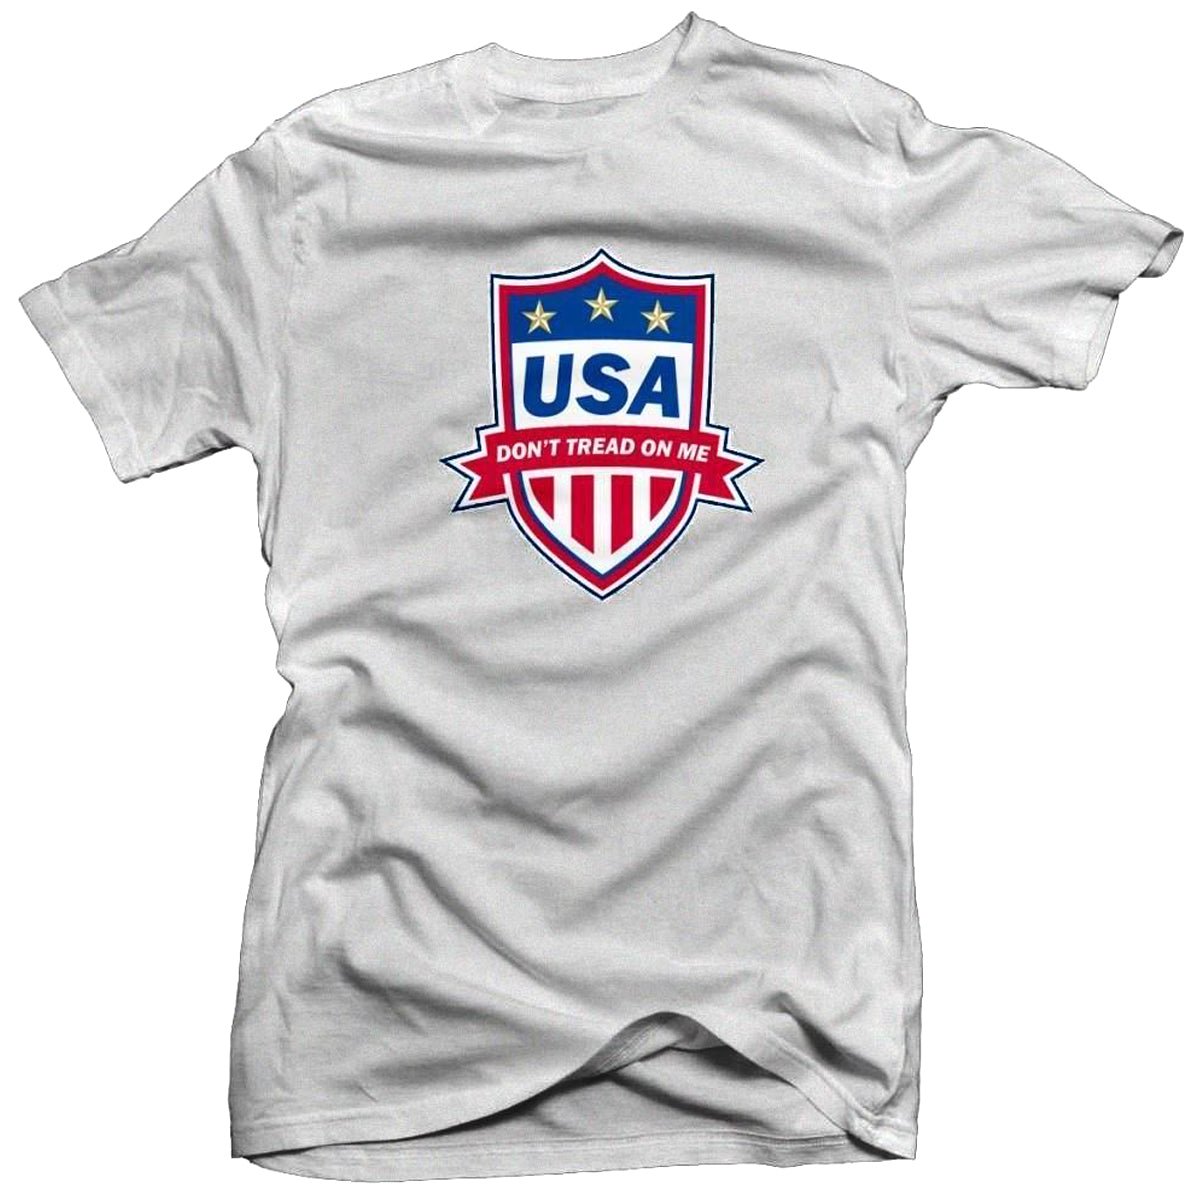 USA Don't Tread on Me Soccer Badge Printed Tee Customized T-shirts 411 Youth Medium Ash 